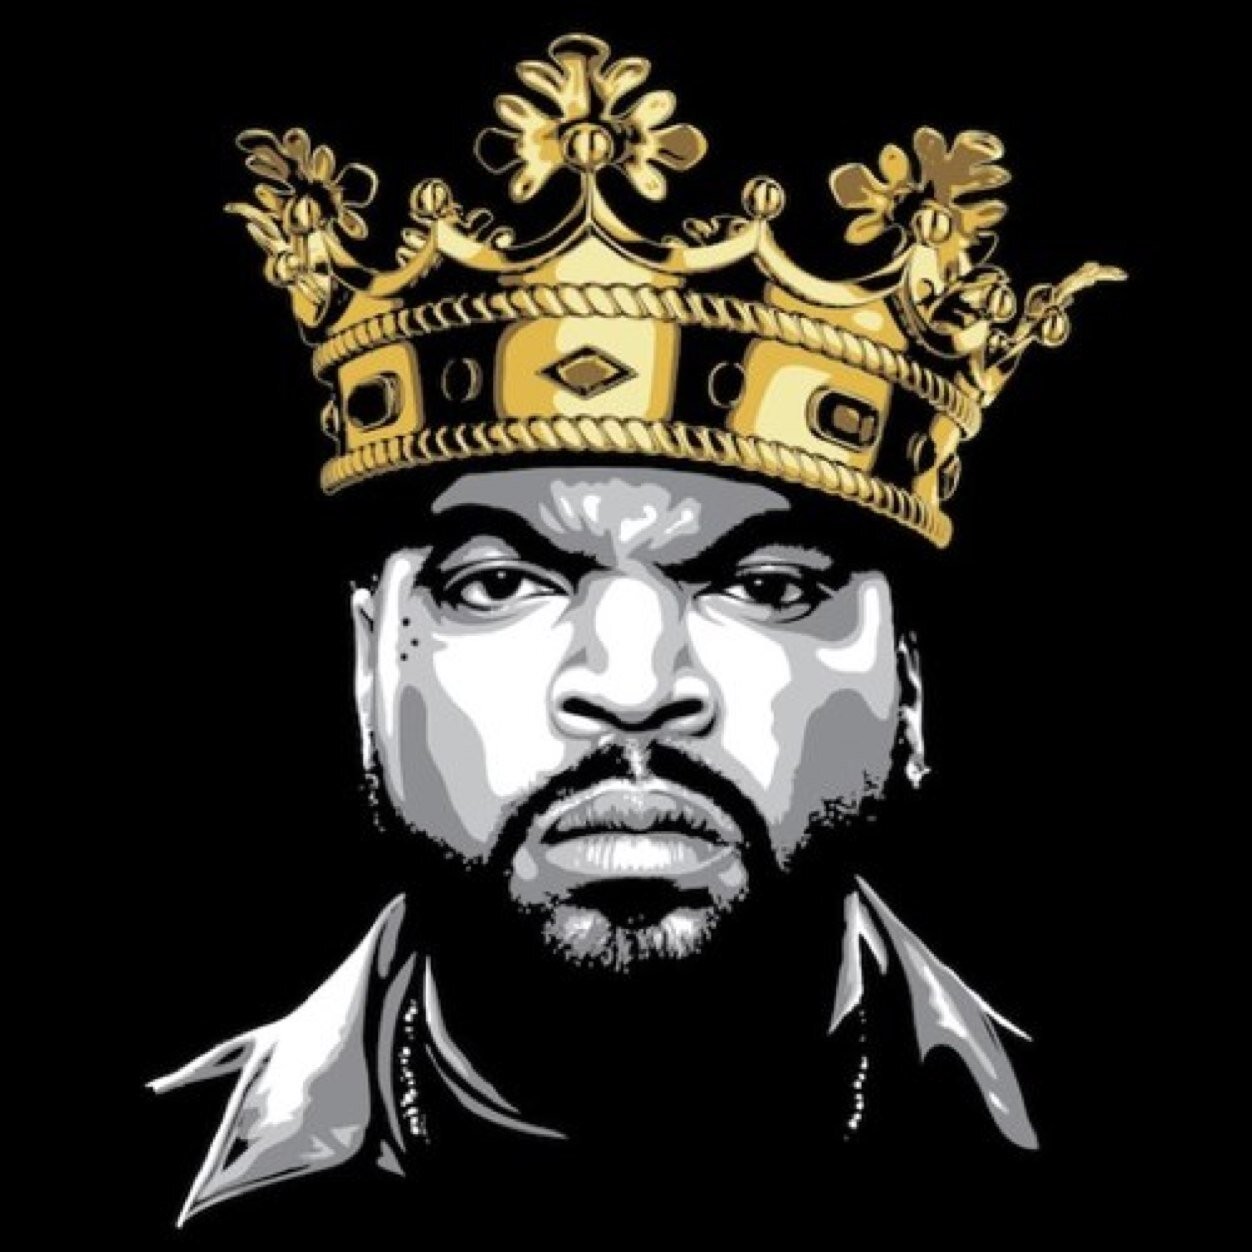 King Ice Cube Wallpaper